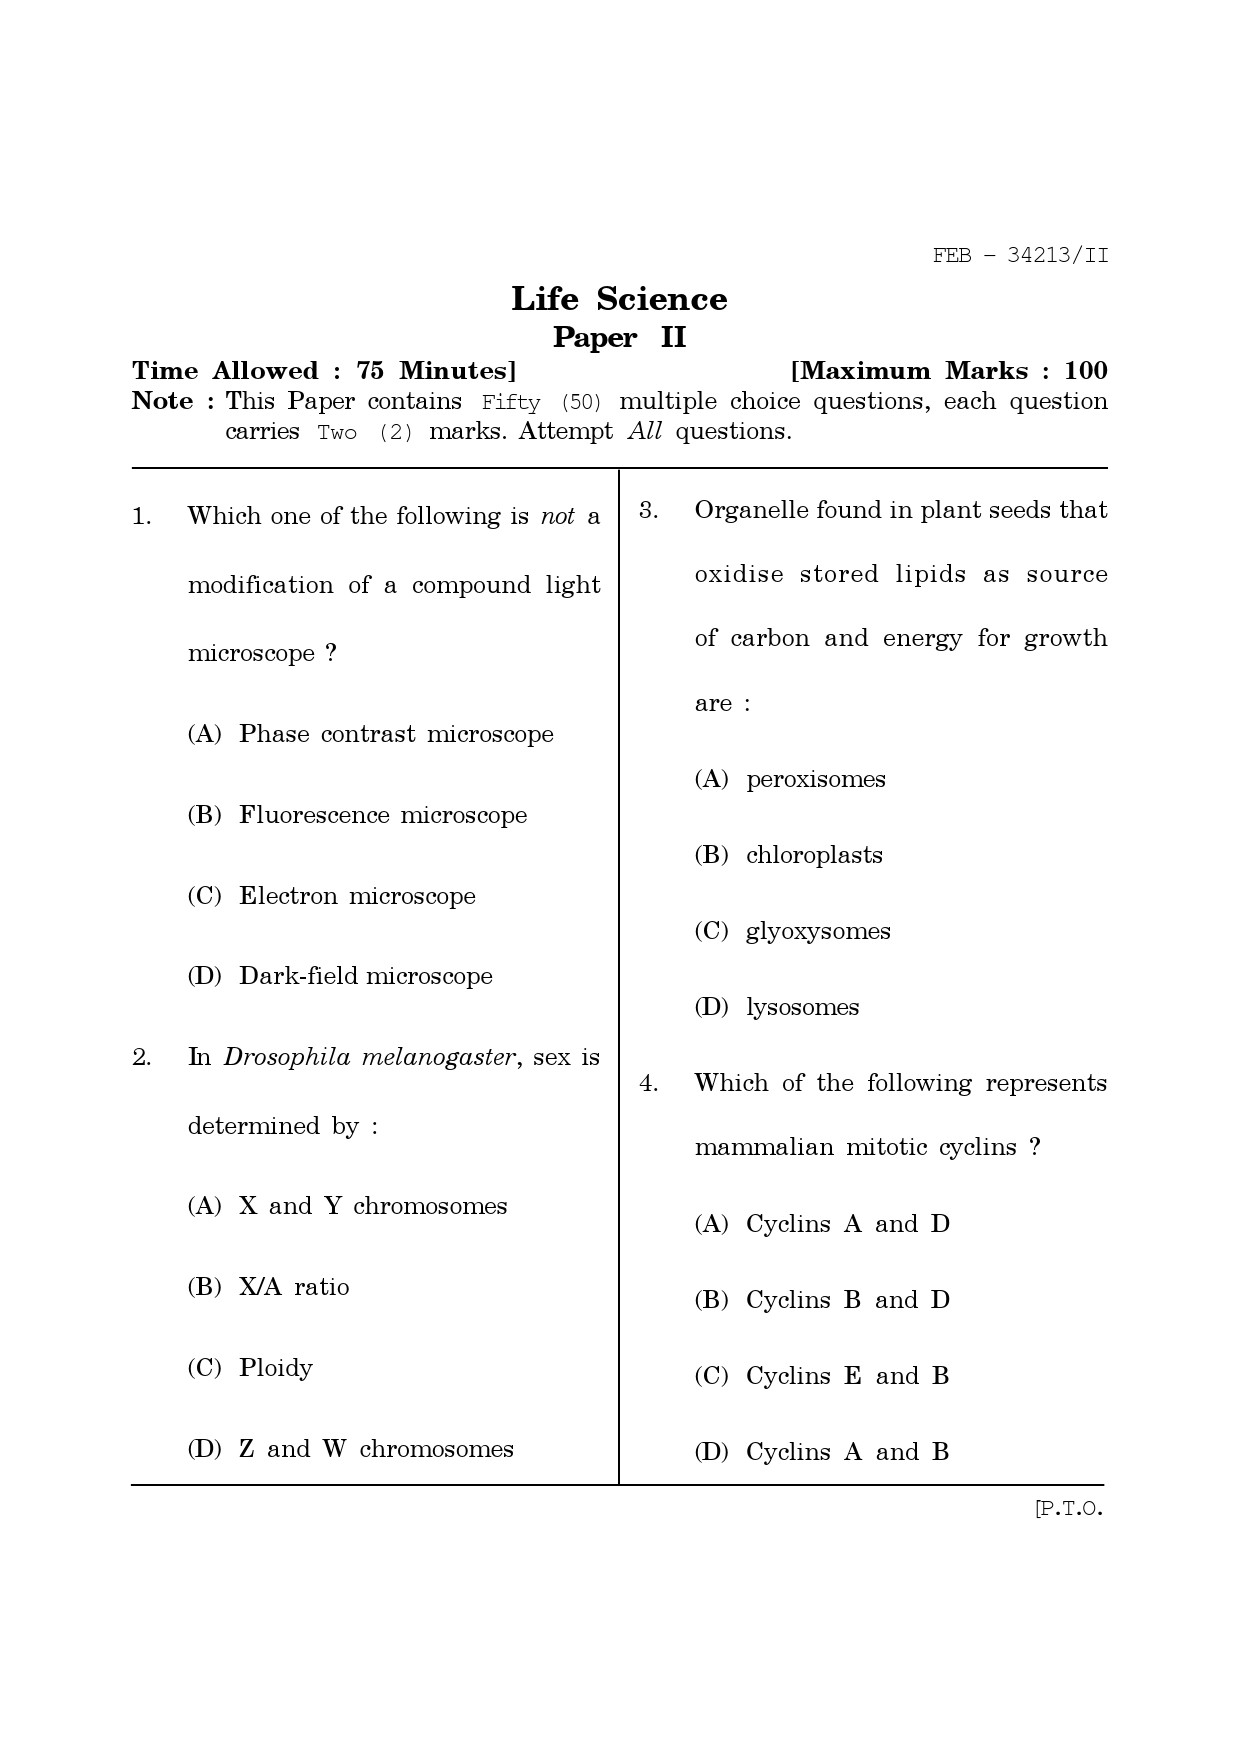 Maharashtra SET Life Sciences Question Paper II February 2013 1